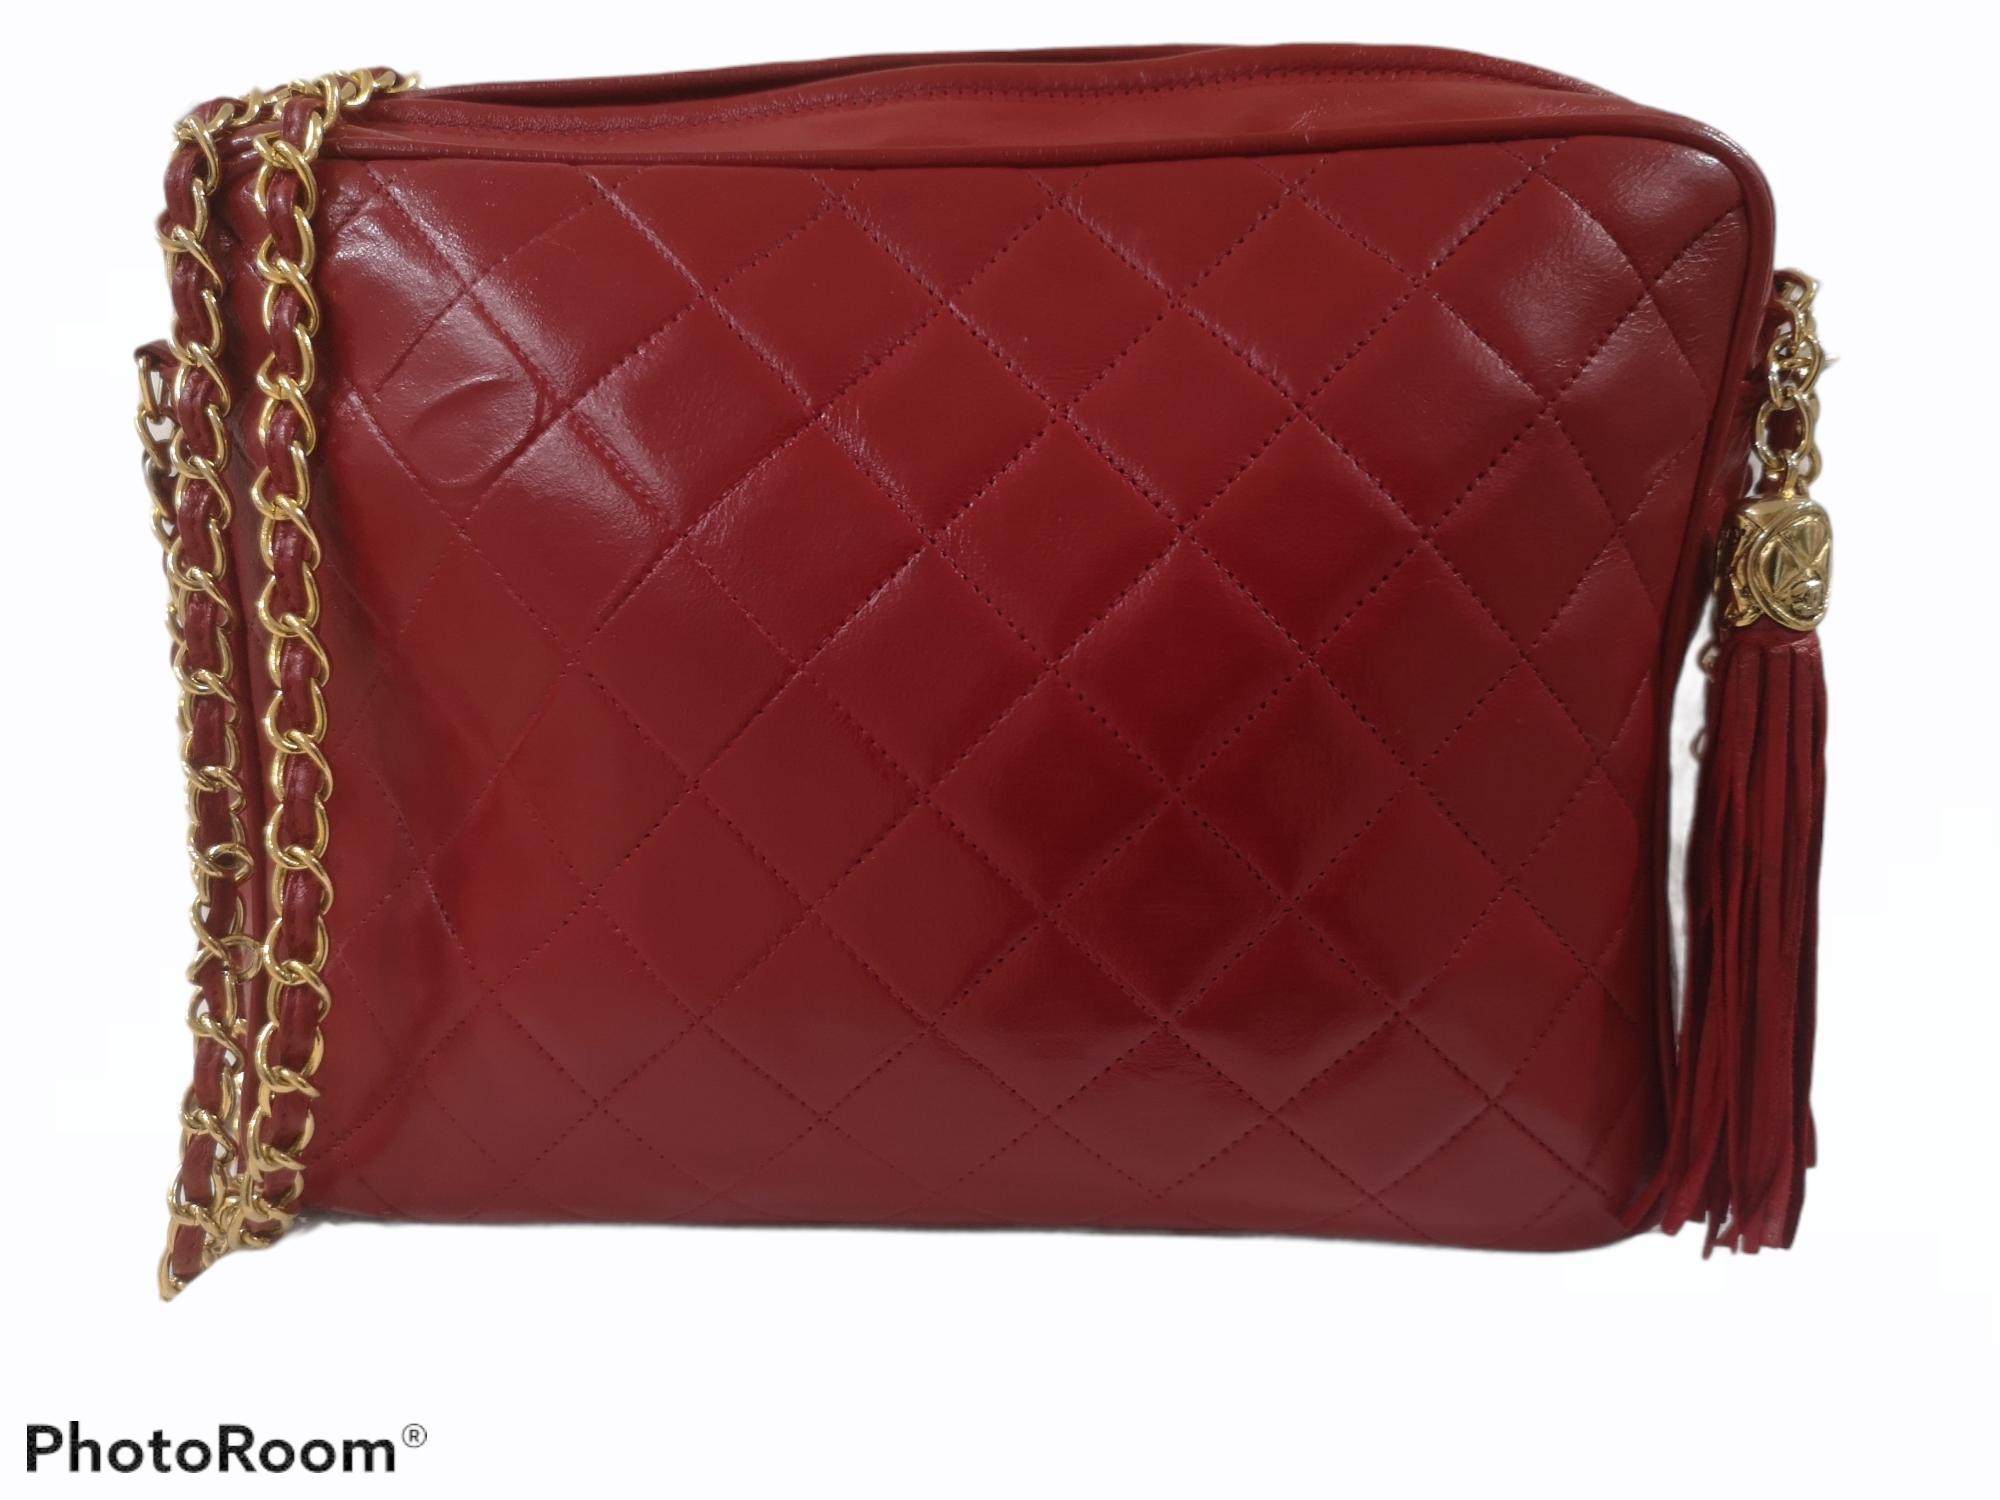 Chanel Camera bag red leather gold tone chain shoulder bag 2